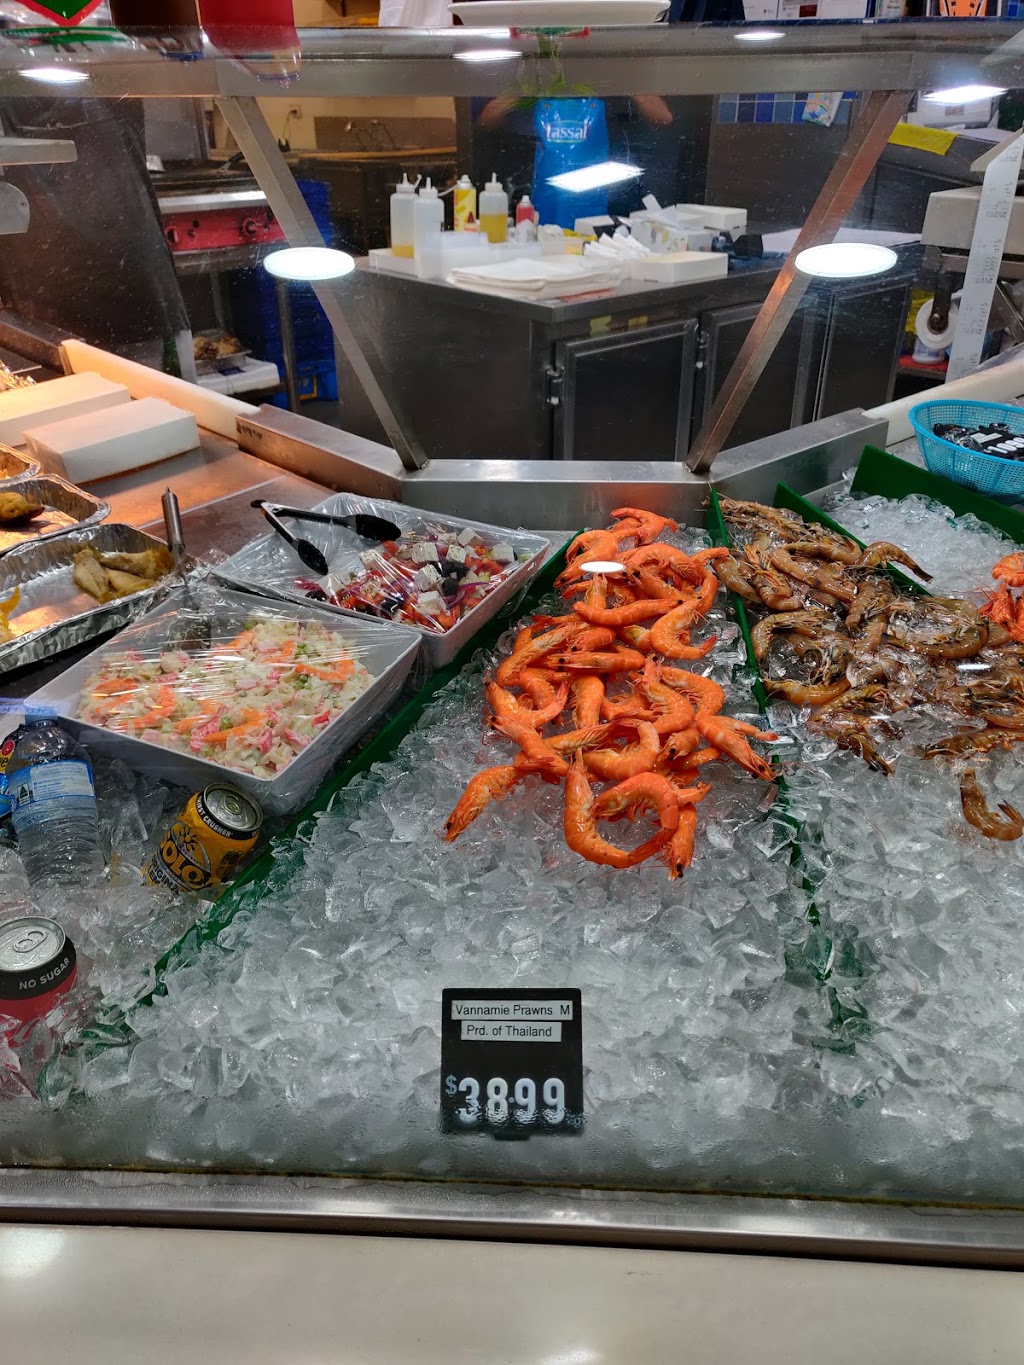 Black Fish Seafood | restaurant | Hillsdale NSW 2036, Australia